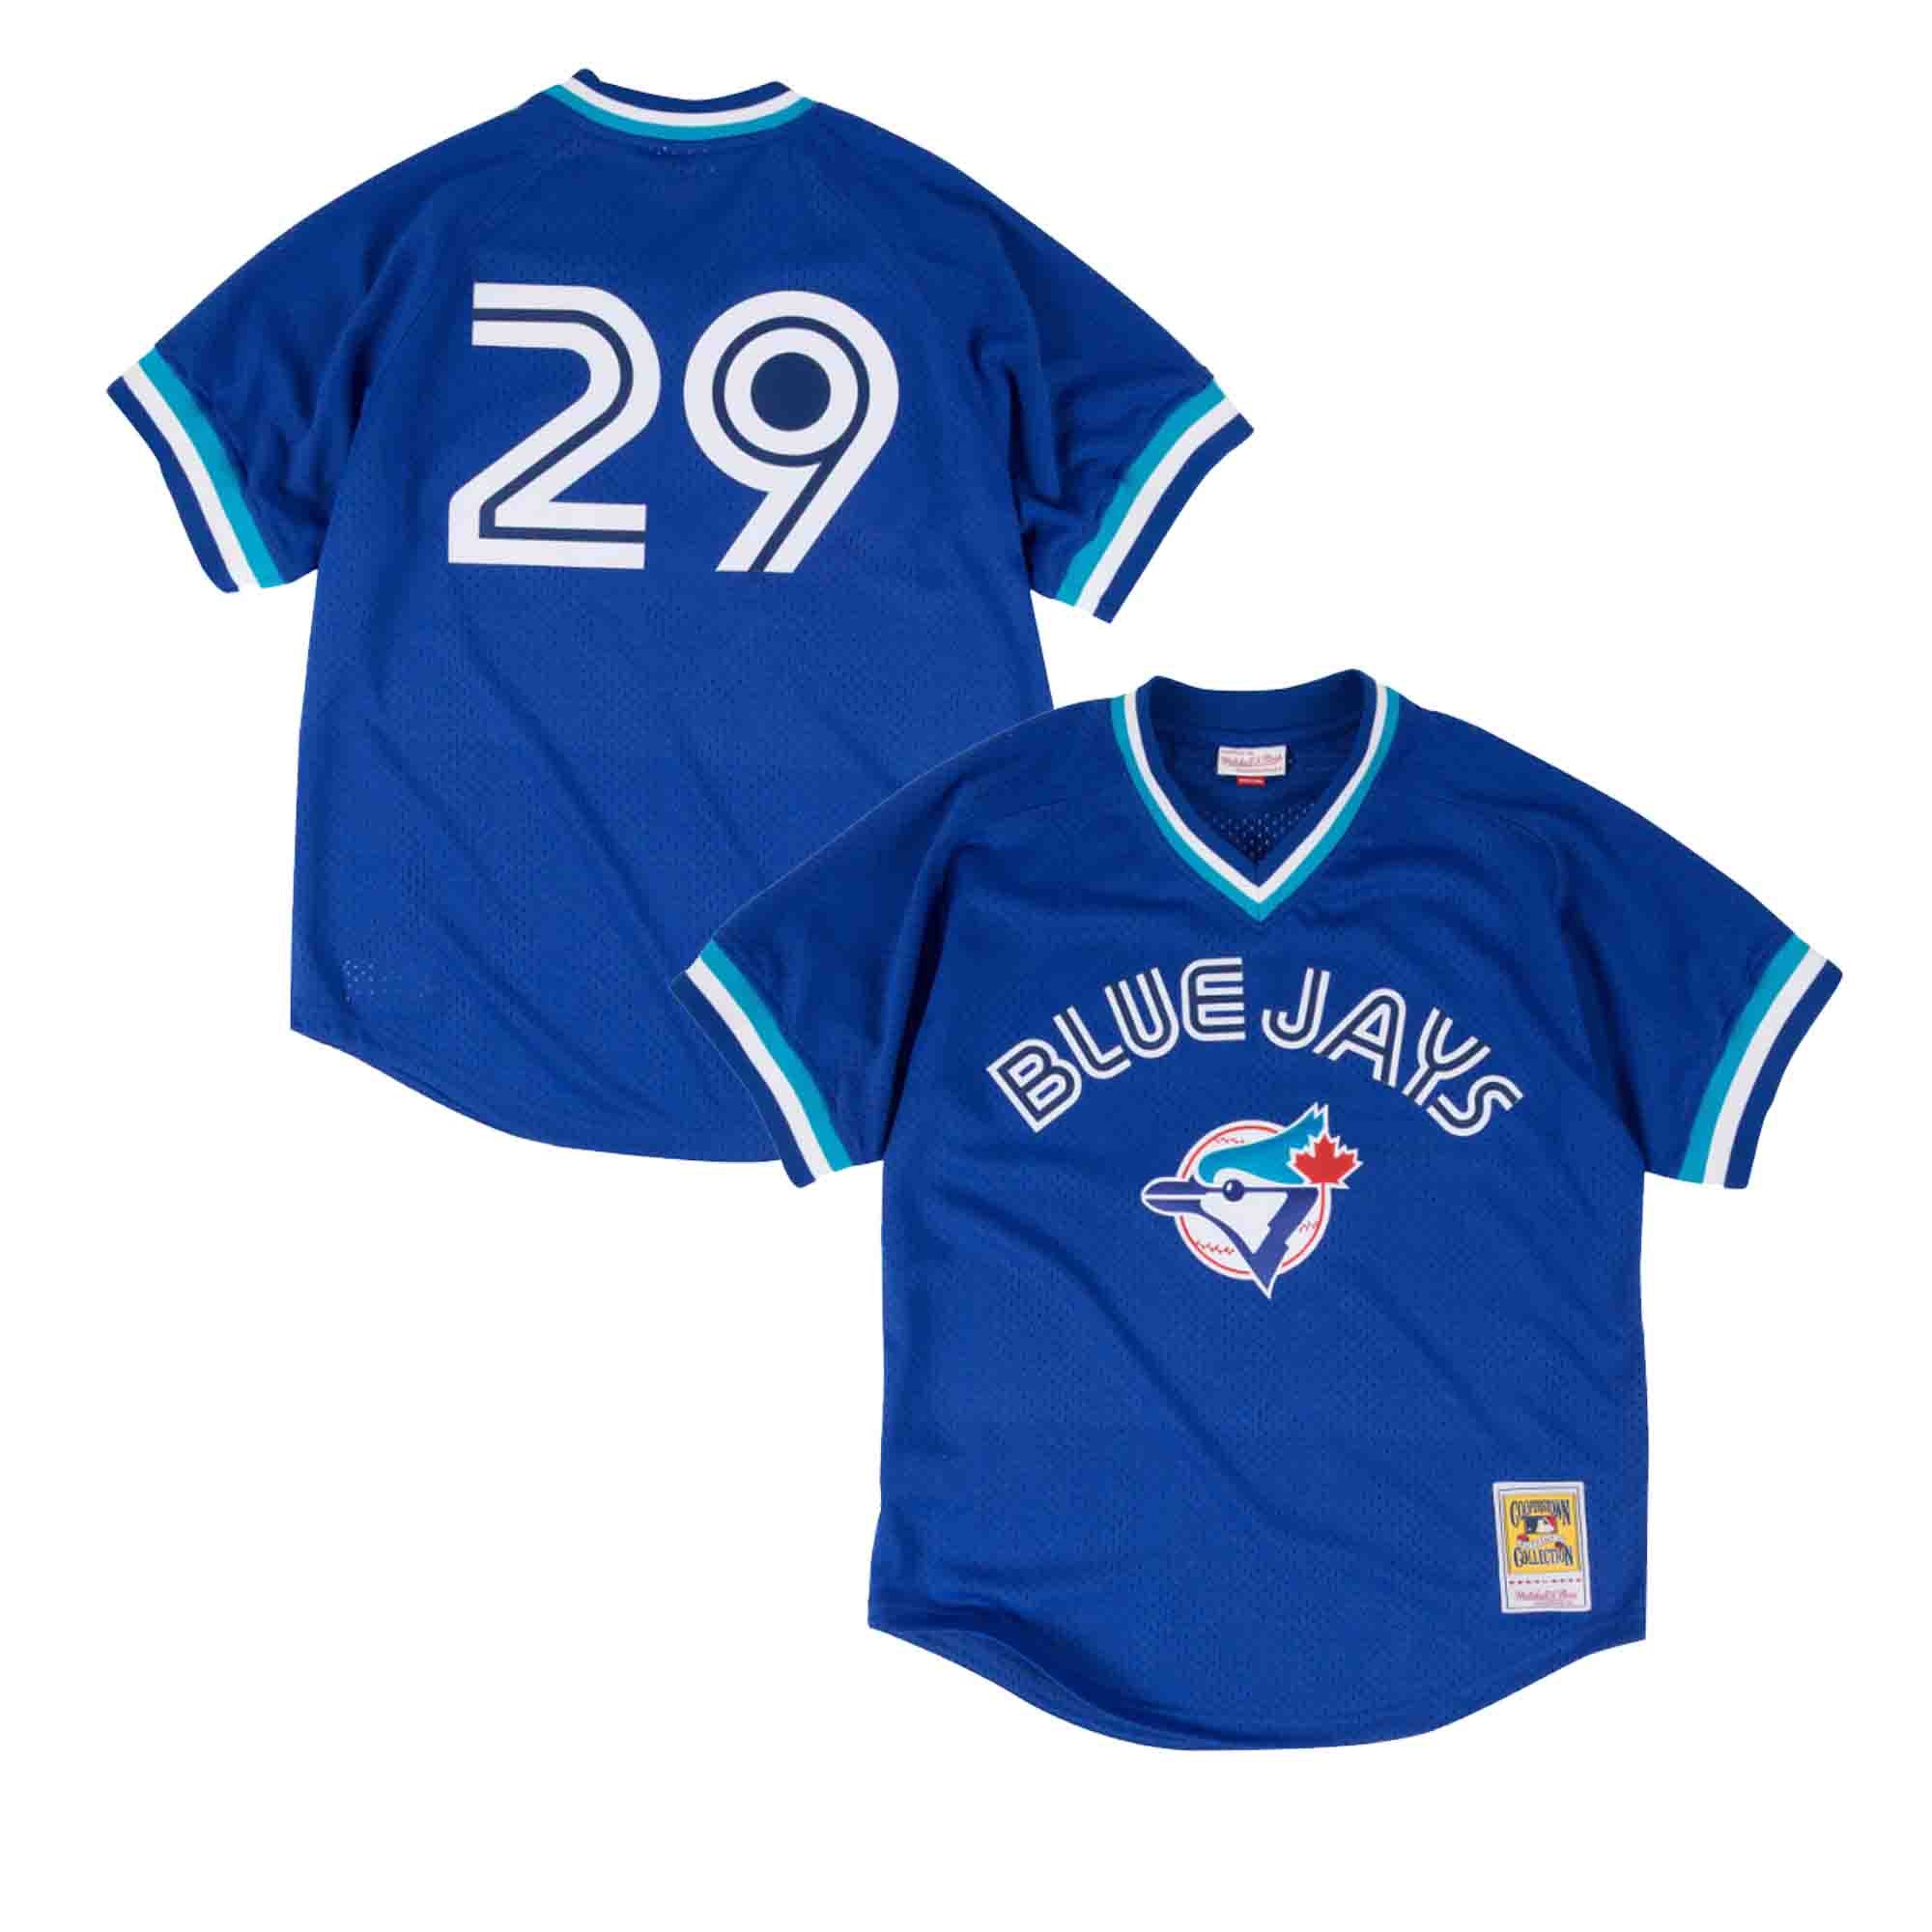 MLB Authentic Jersey Toronto Blue Jays 1992 Joe Carter #29